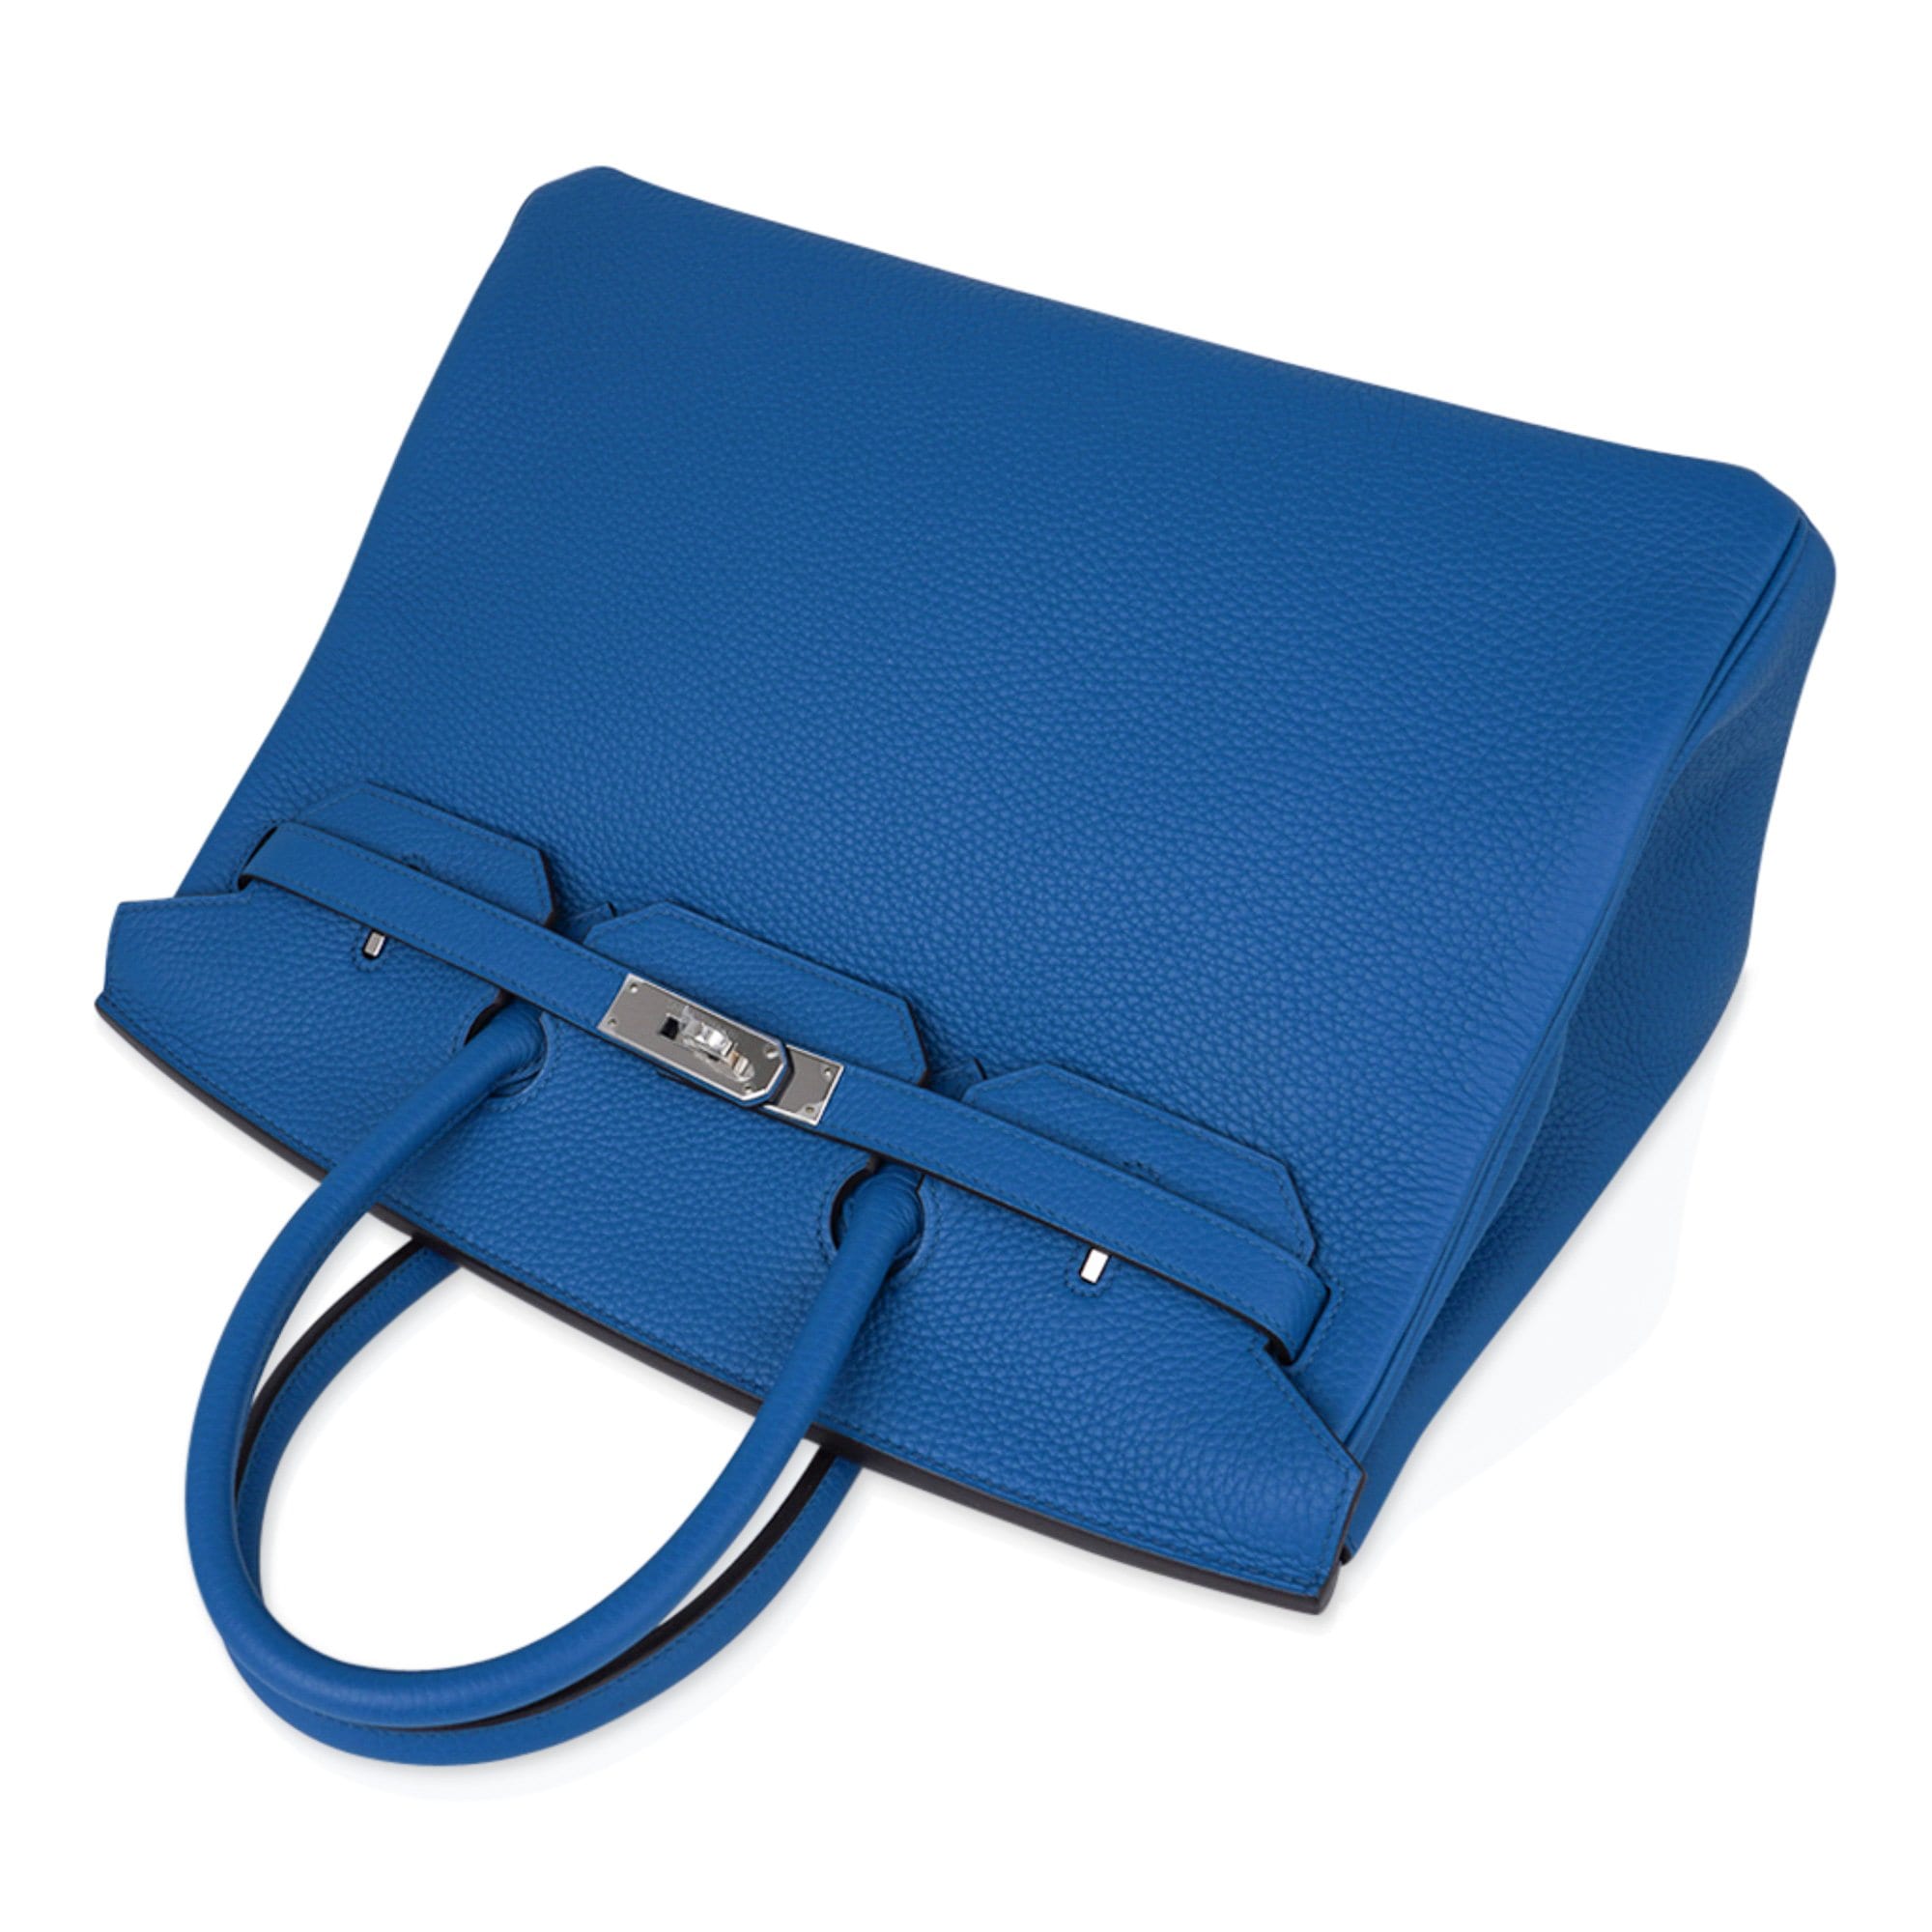 Hermes Clemence Leather Birkin Bag 35 Blue Green